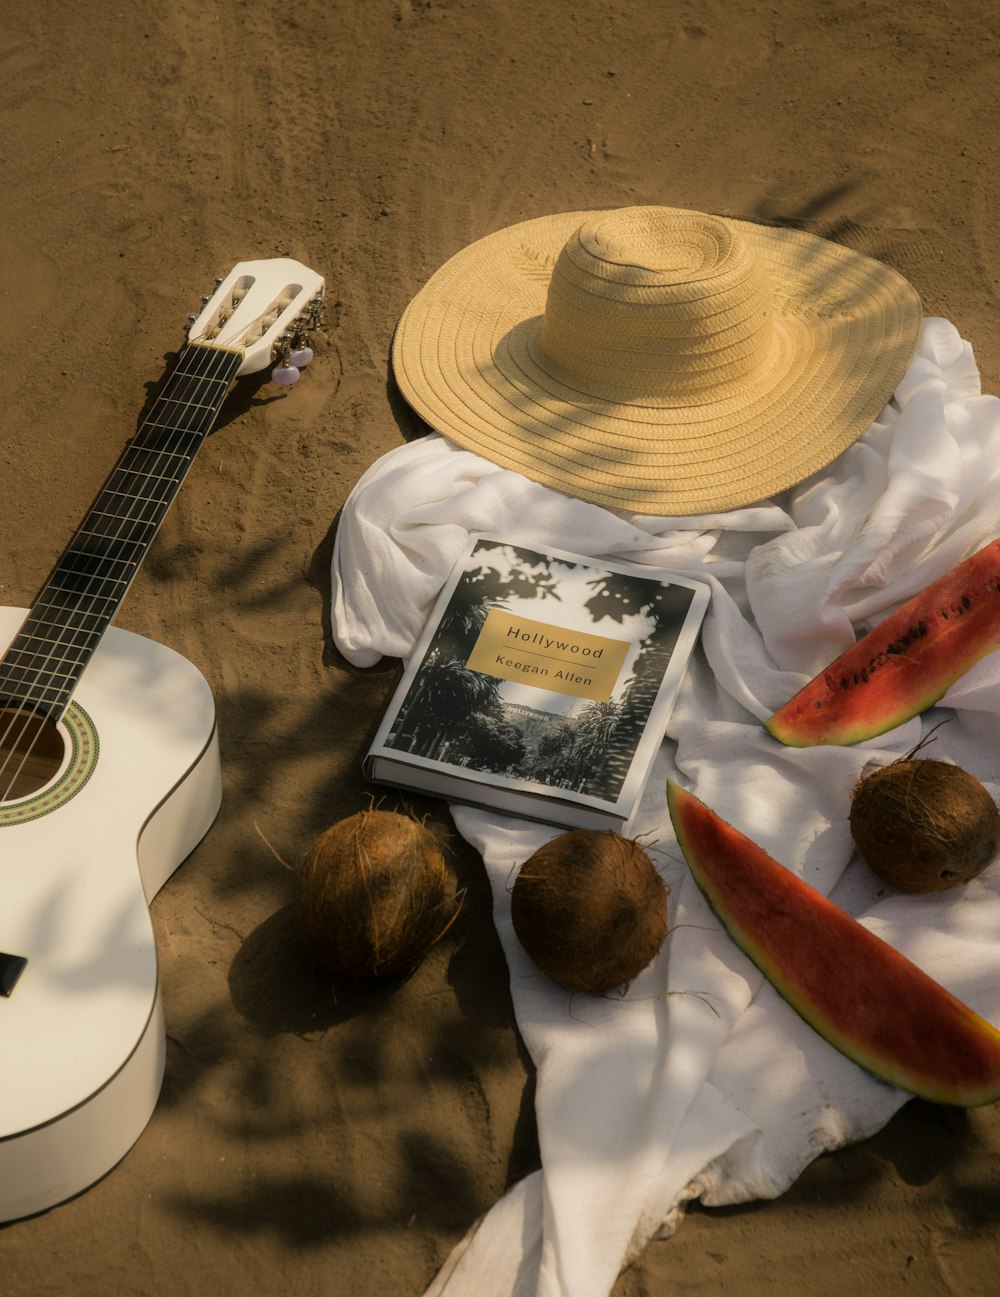 a guitar, hat, watermelon, and a book on a beach